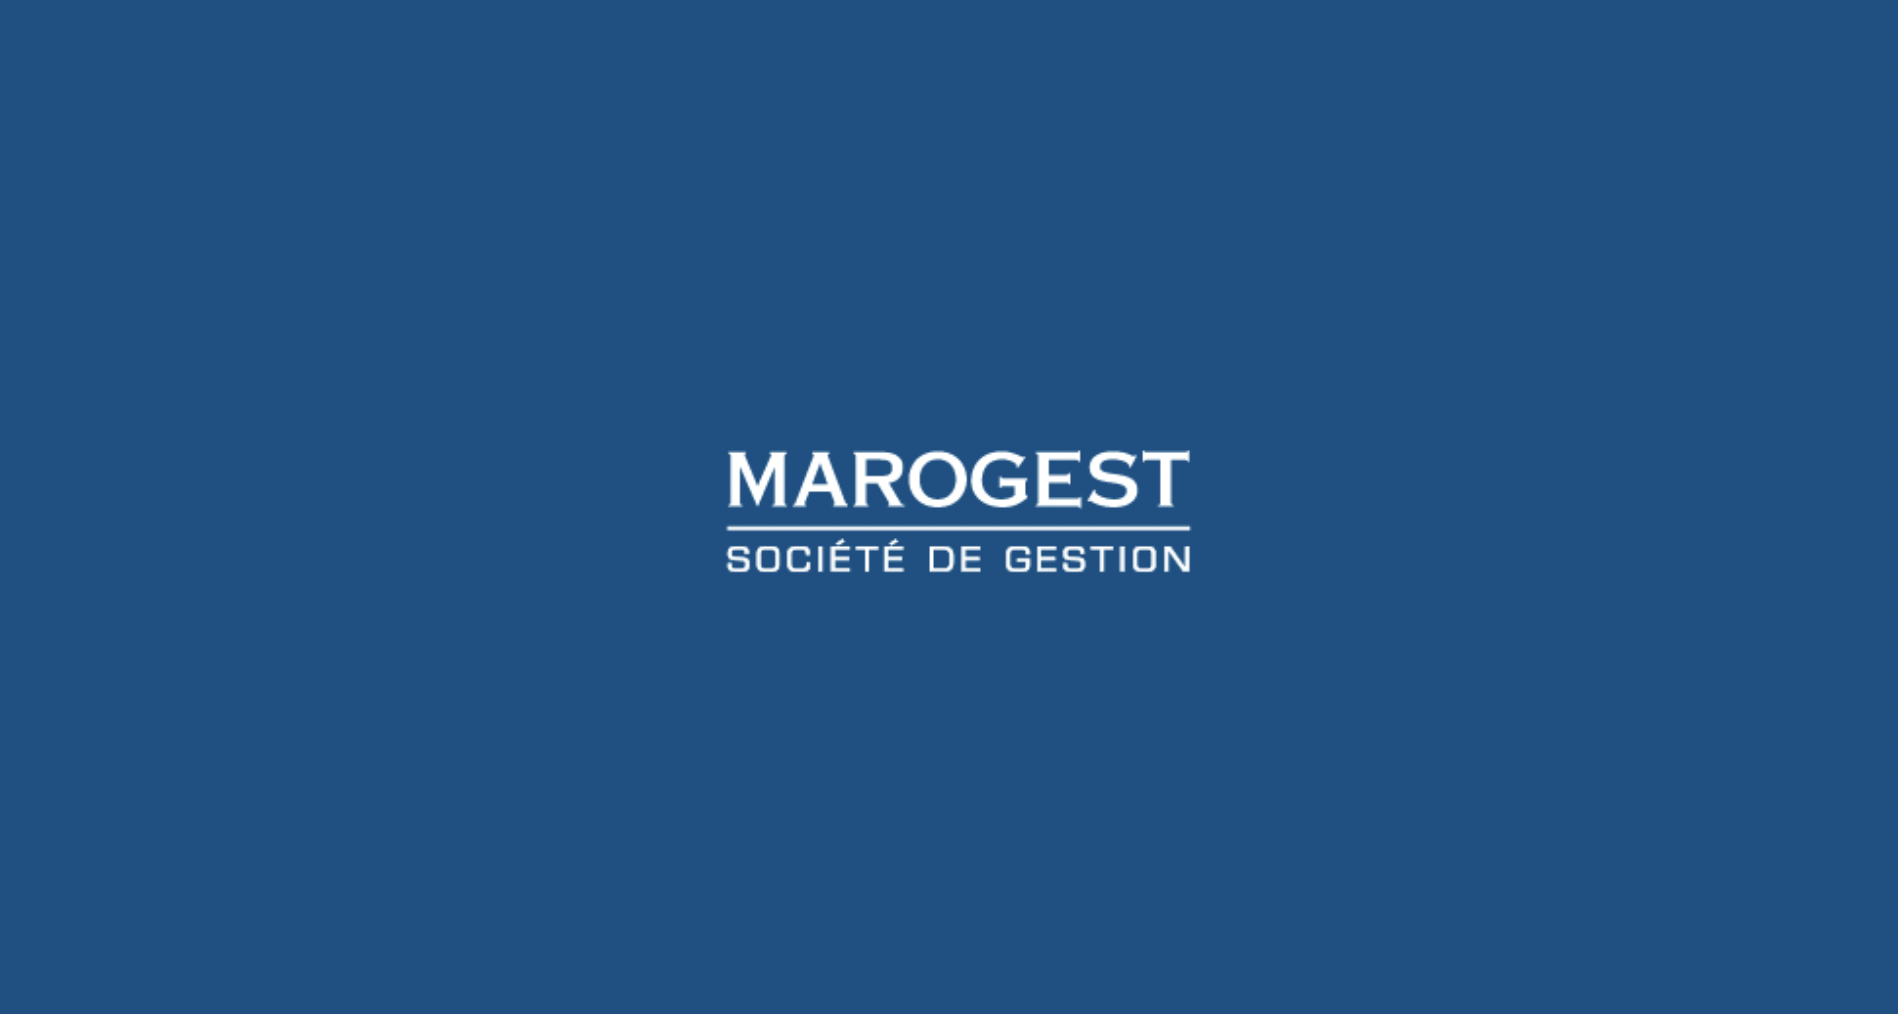 MAROGEST obtient la norme ISAE 3402 Type 2